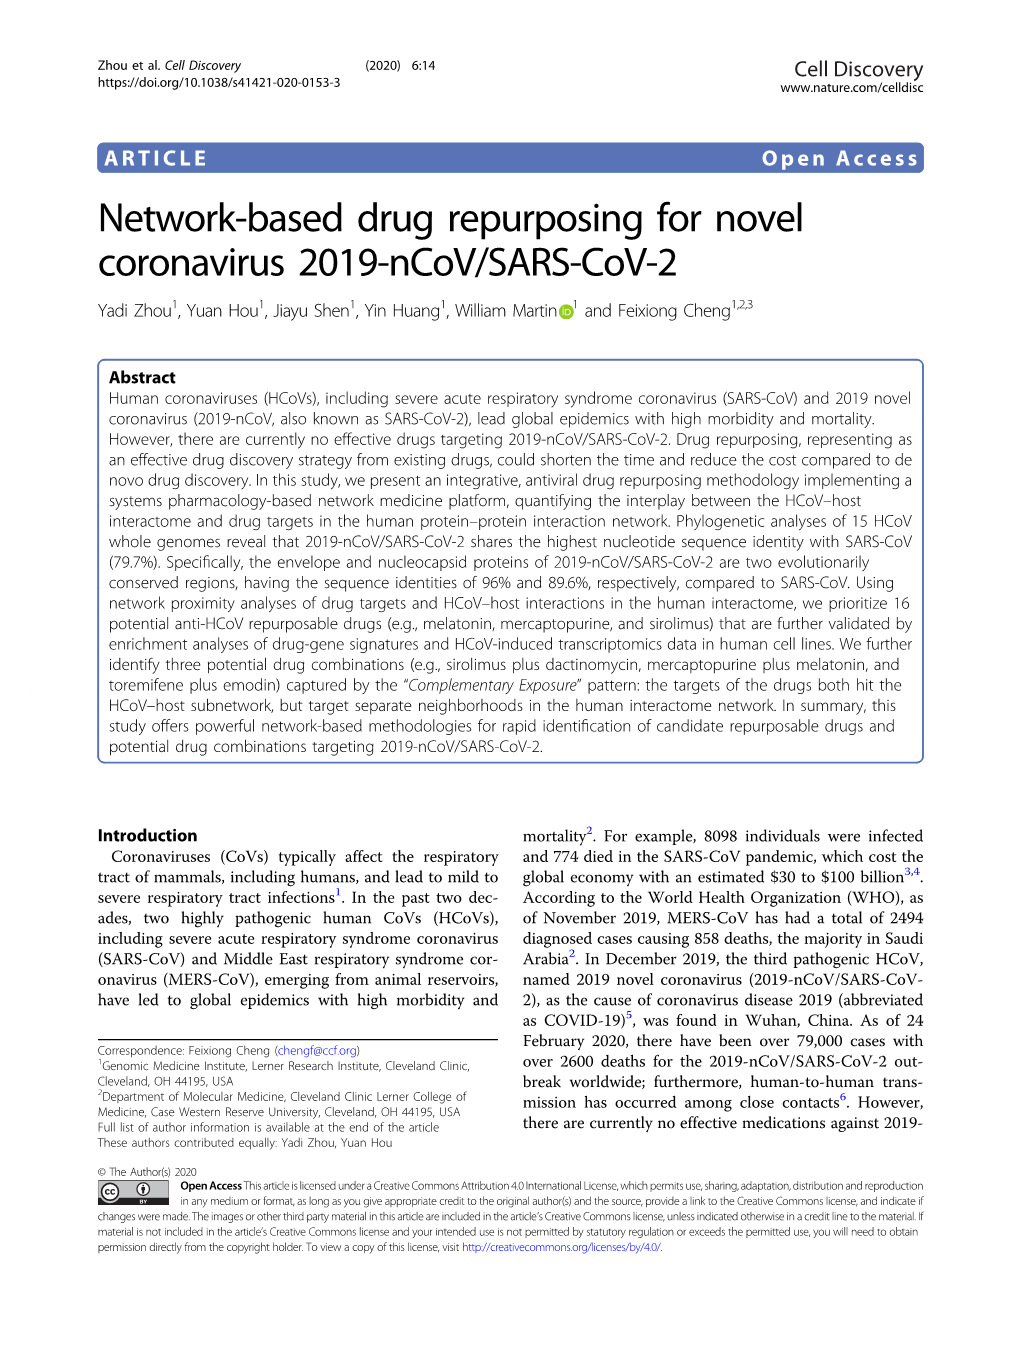 Network-Based Drug Repurposing for Novel Coronavirus 2019-Ncov/SARS-Cov-2 Yadi Zhou1,Yuanhou1,Jiayushen1,Yinhuang1, William Martin 1 and Feixiong Cheng1,2,3